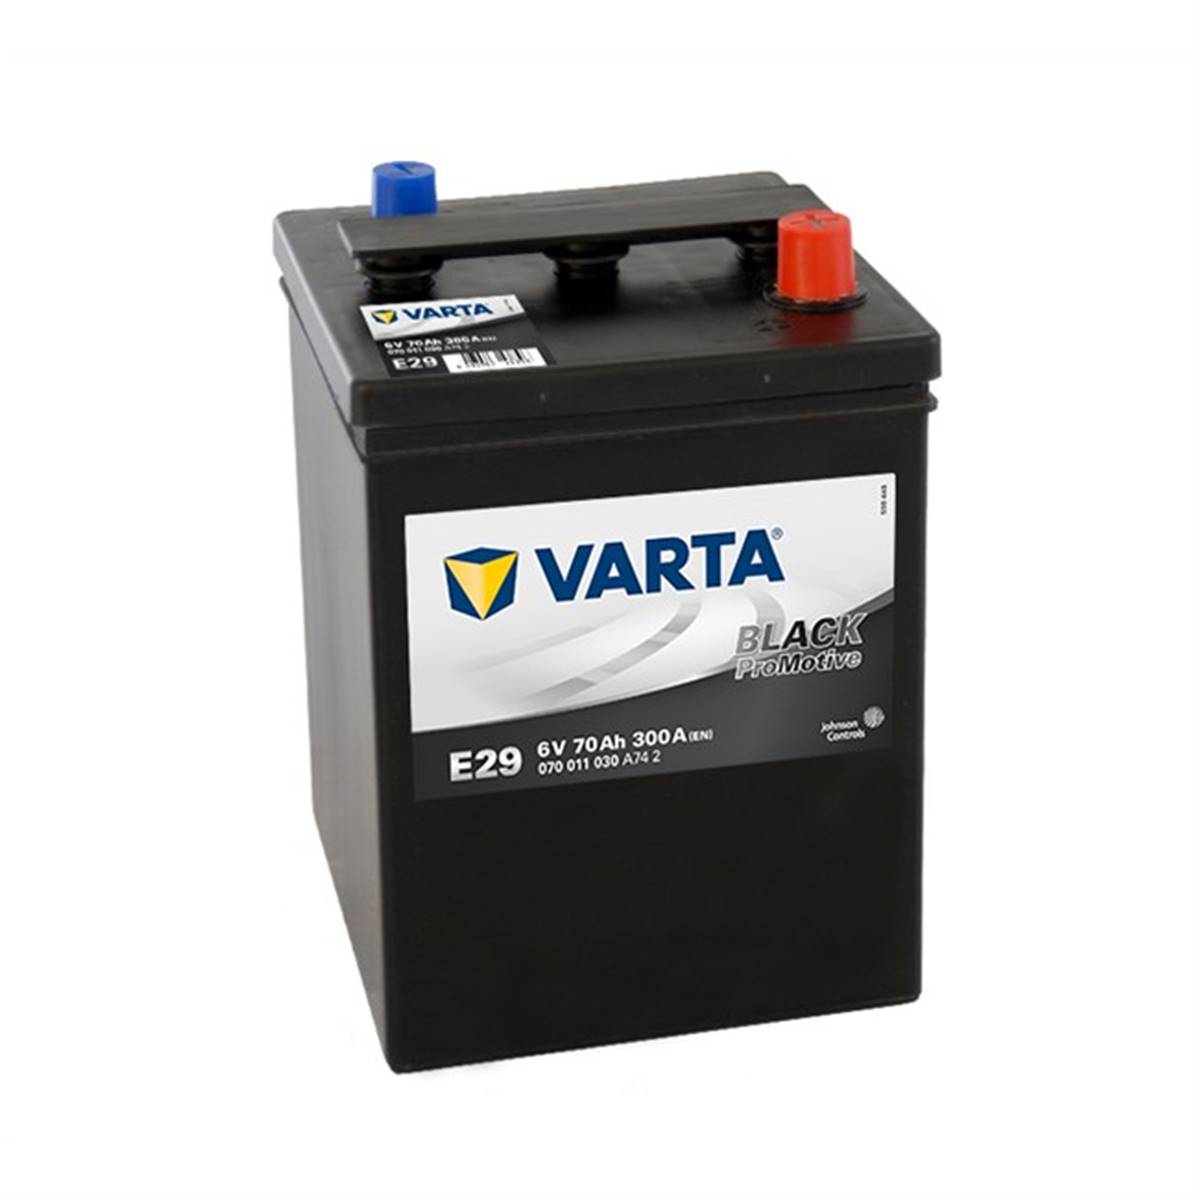 Batterie VARTA C20 ProMotive Black 55Ah 420A